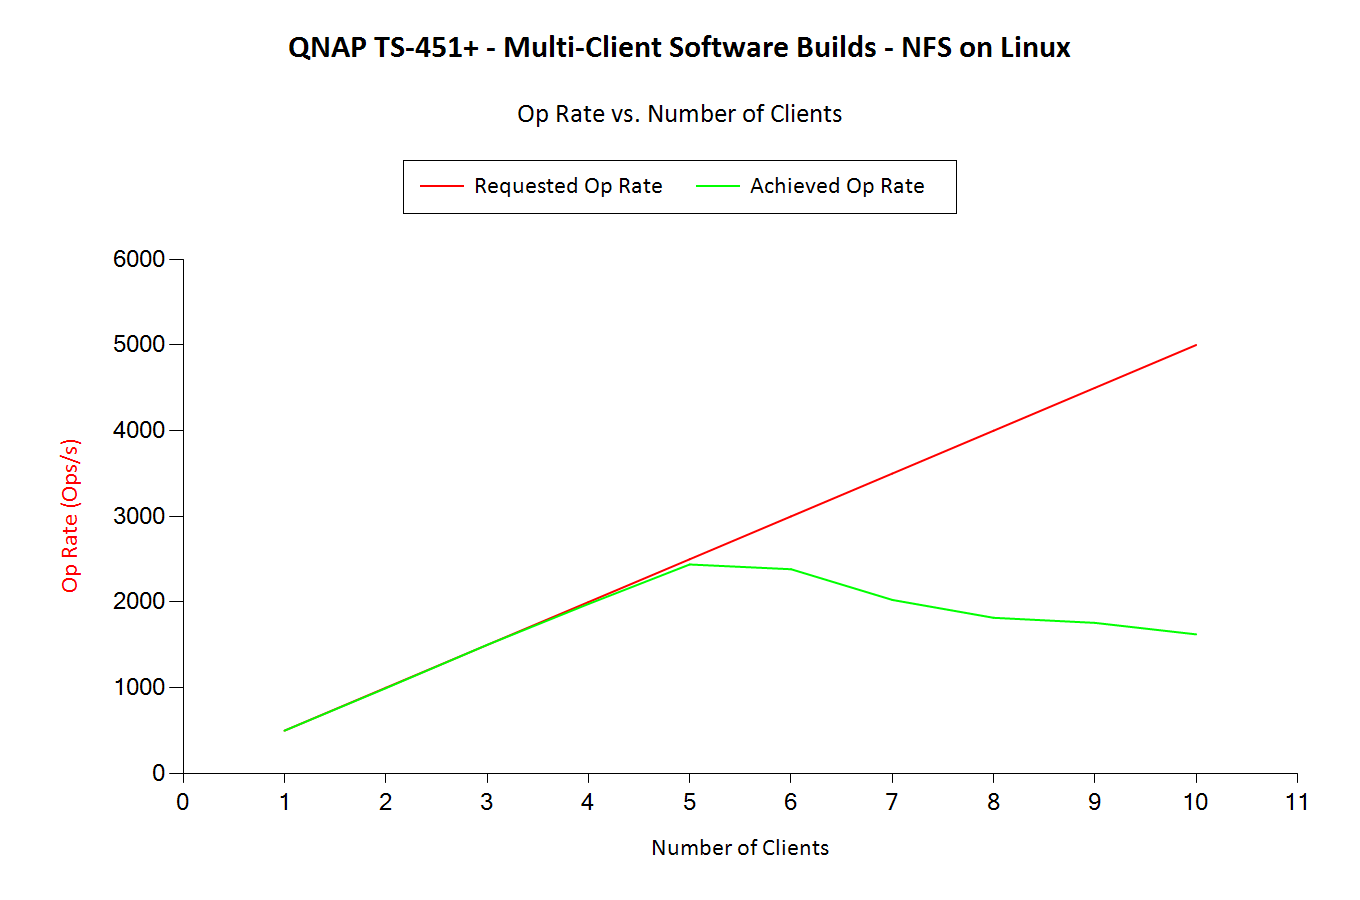 Software Builds - Op Rates